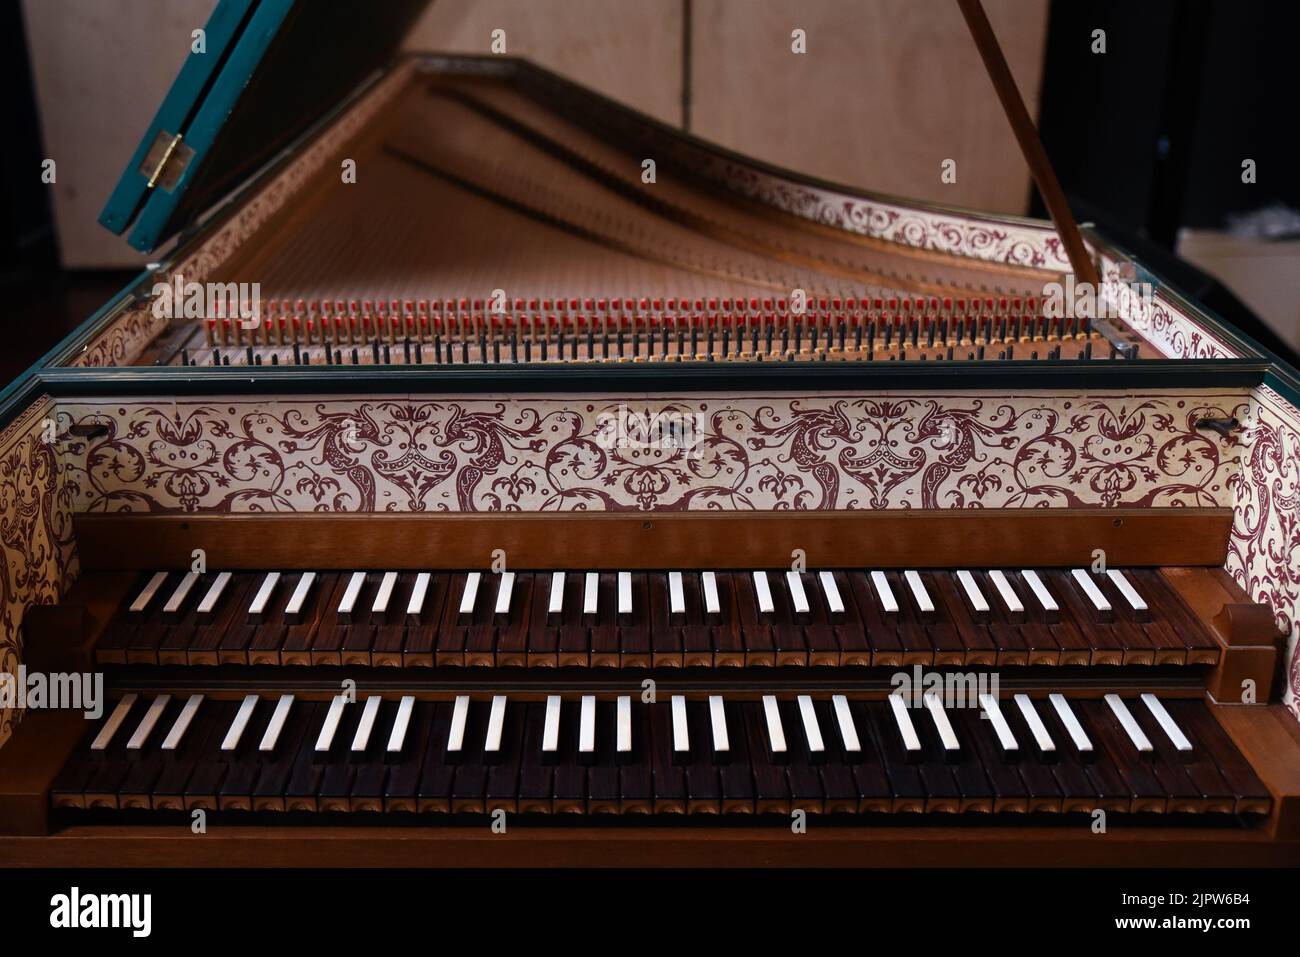 Harpsichord aka Cembalo Keyboard Musical Instrument Stock Photo